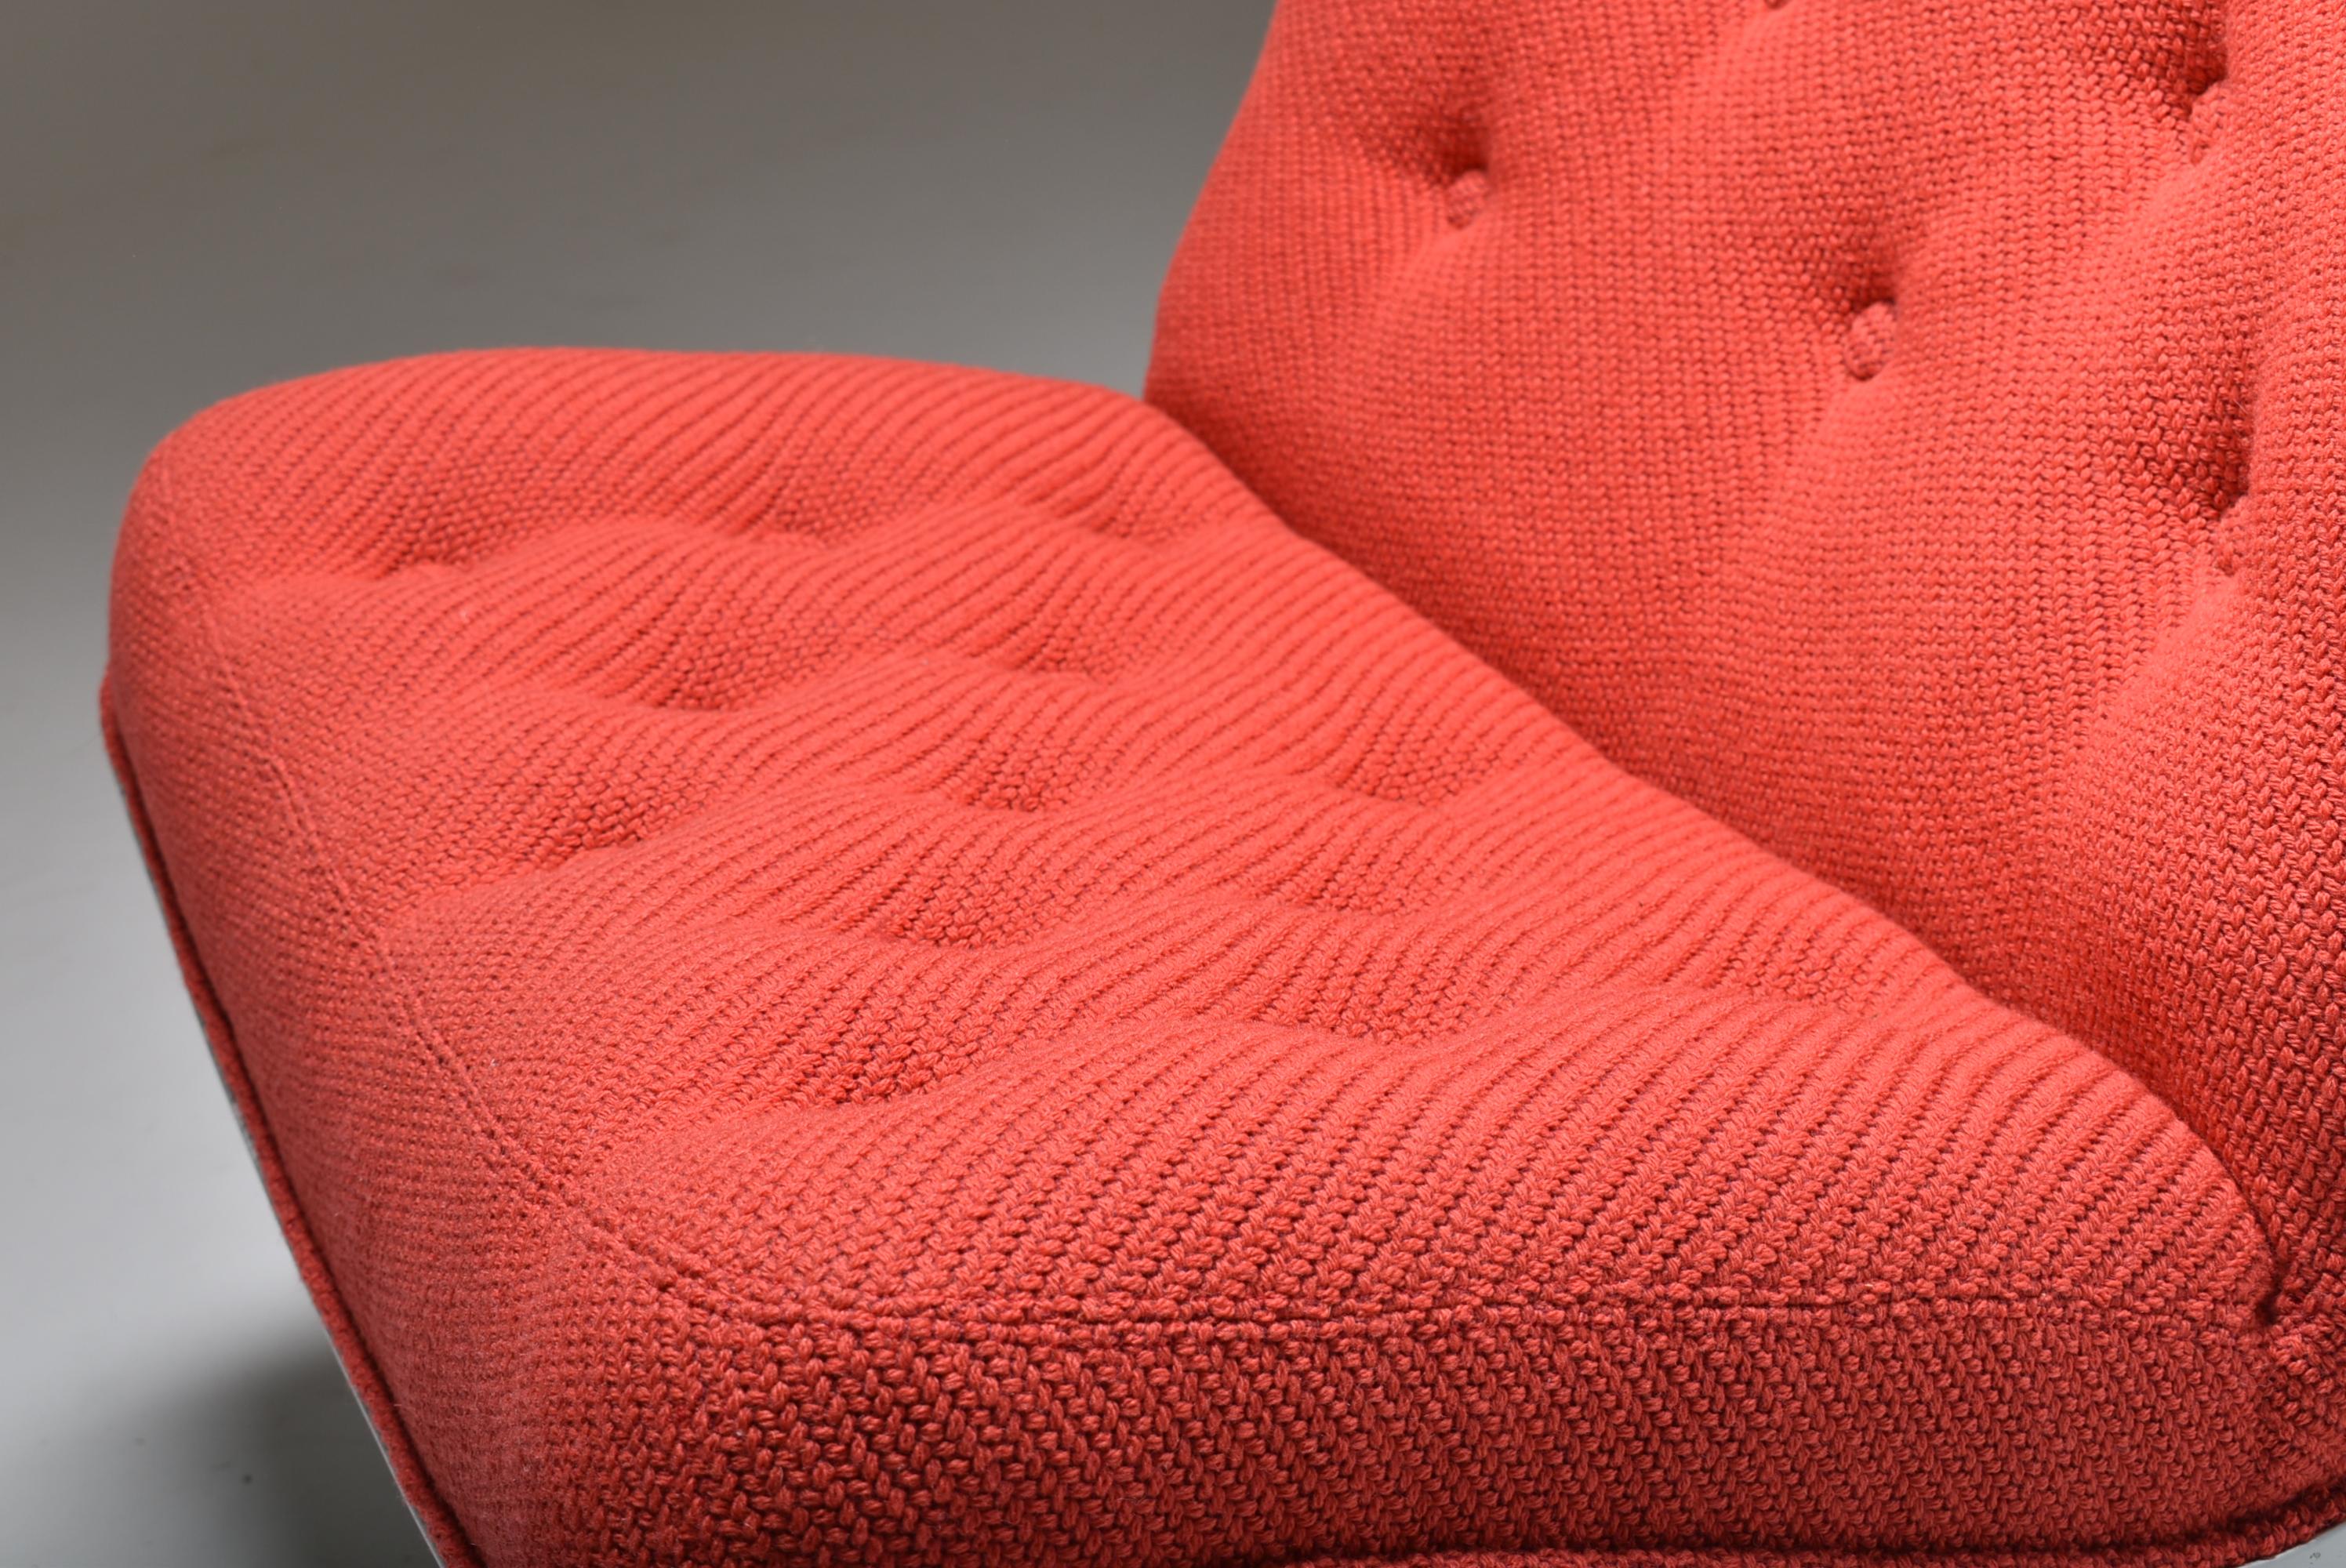 Fabric Swivel chair n°976 by Geoffrey Harcourt for Artifort